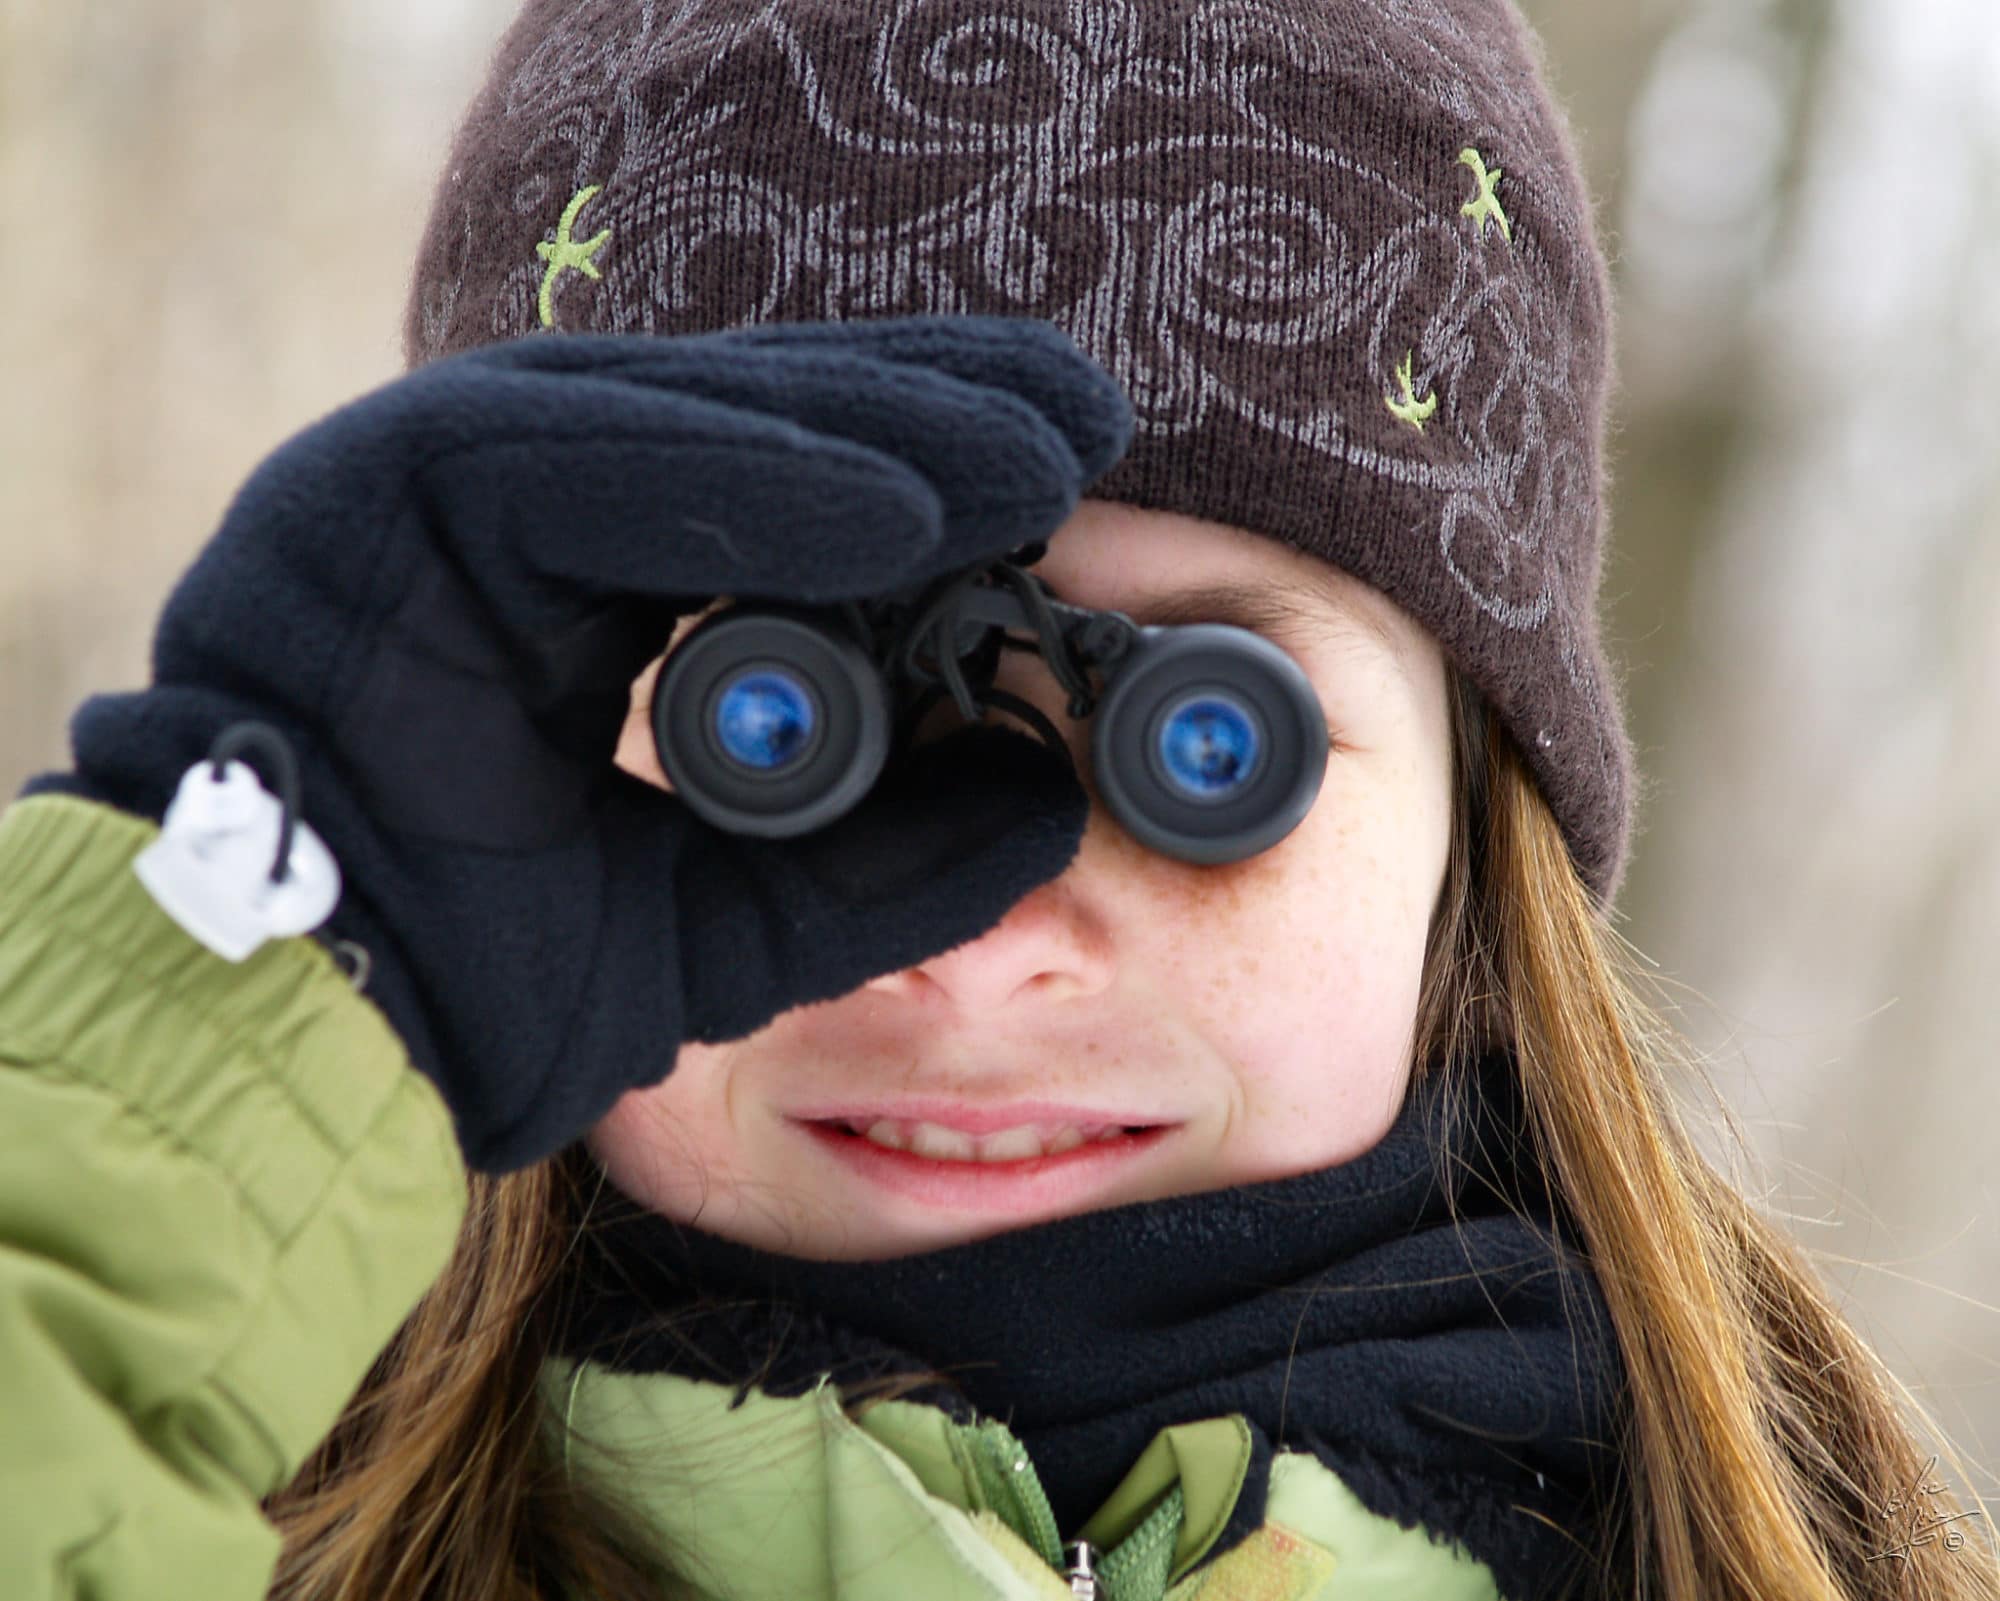 young girl birding in winter (photo © Eric Begin)